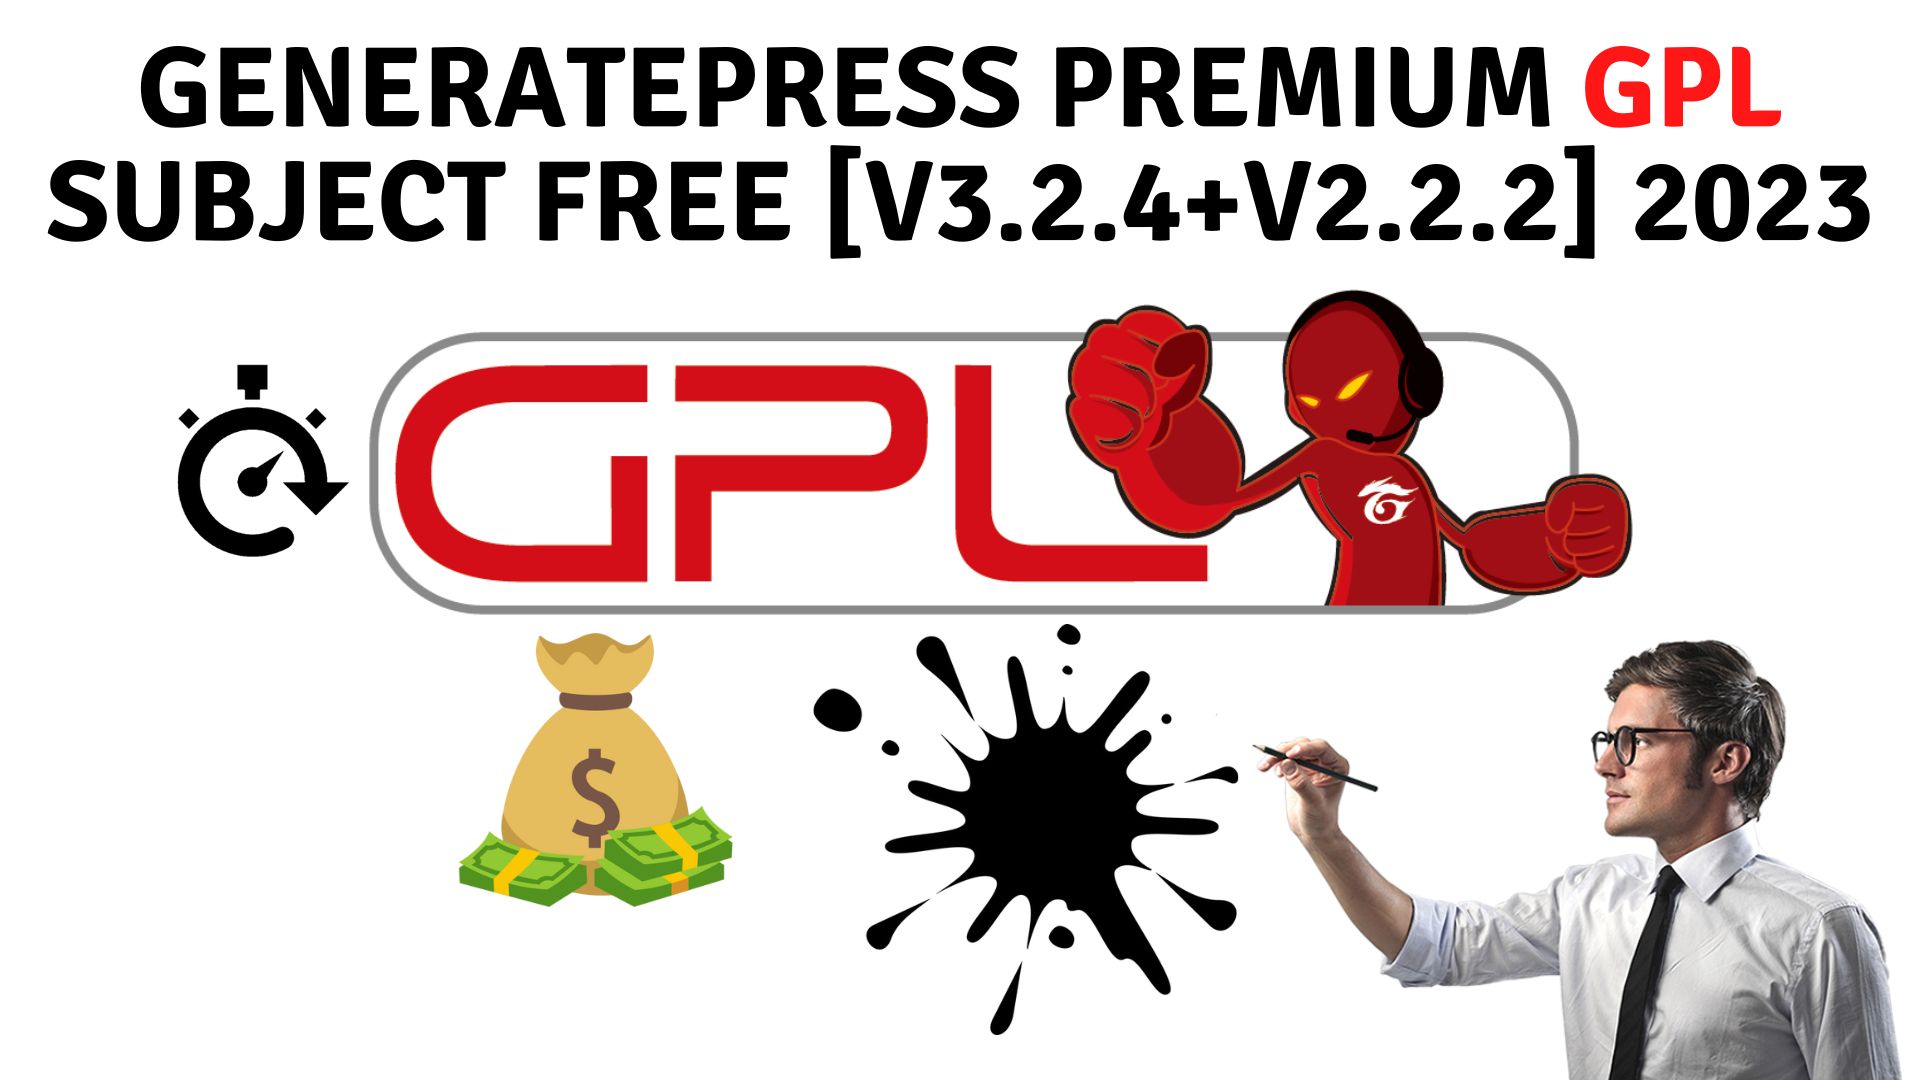 Generatepress premium gpl subject free [v3. 2. 4+v2. 2. 2] 2023